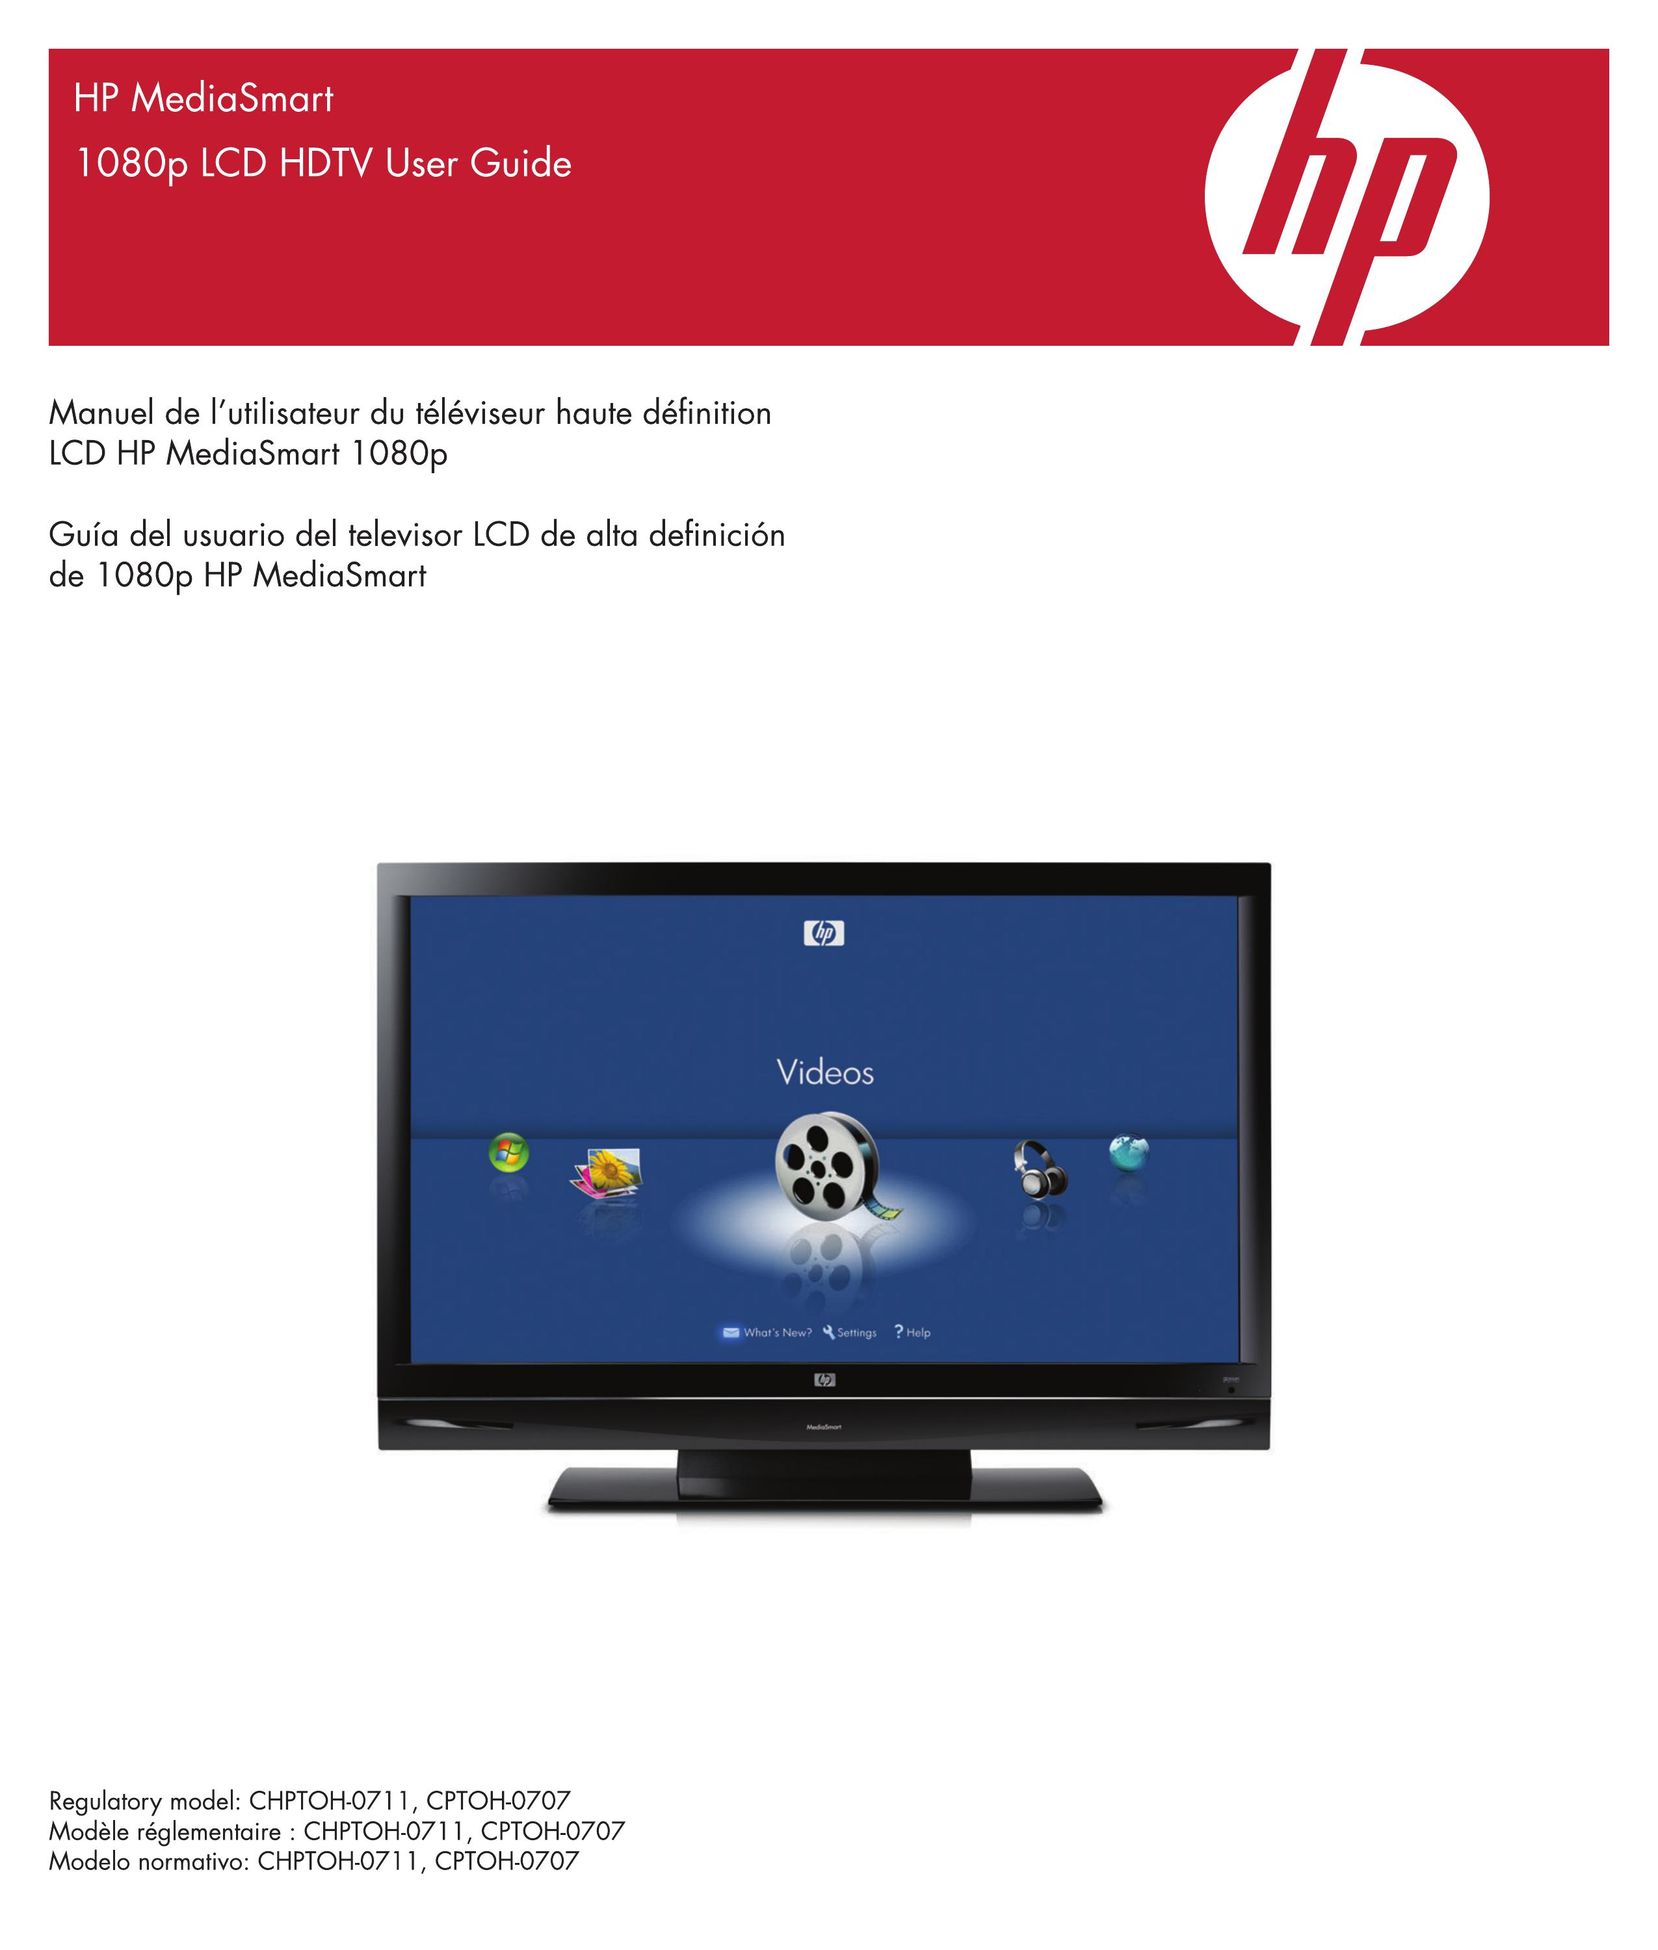 HP (Hewlett-Packard) CHPTOH-0711 Flat Panel Television User Manual